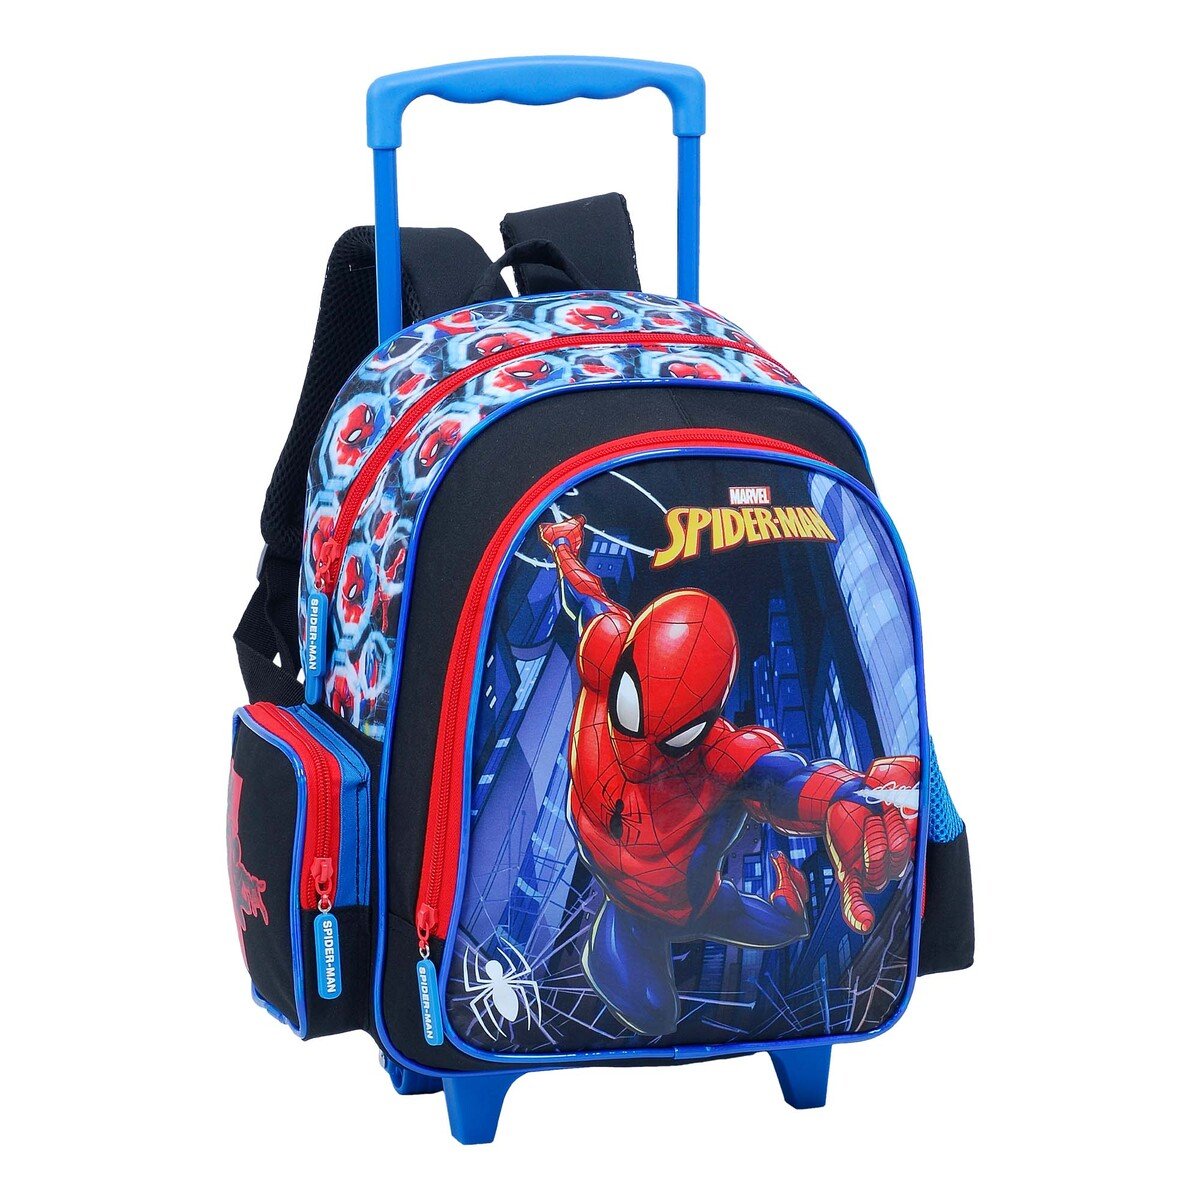 Spider-Man School Trolley 14 inch | School Supplies | Halabh.com